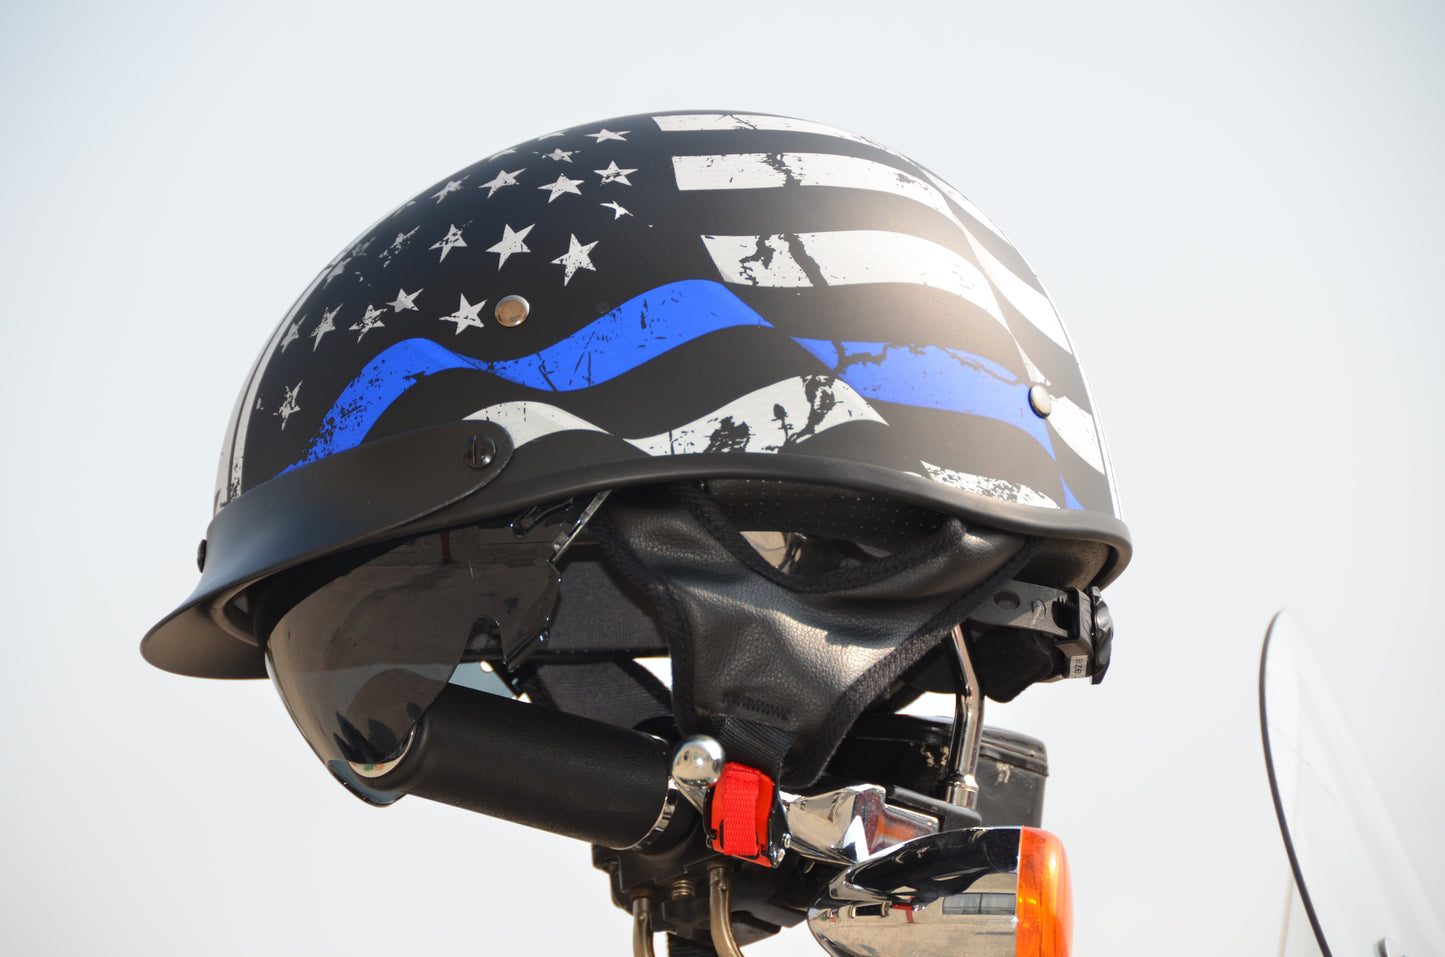 Vega Warrior Half Helmet with size adjuster, dropdown shield and sunvisor